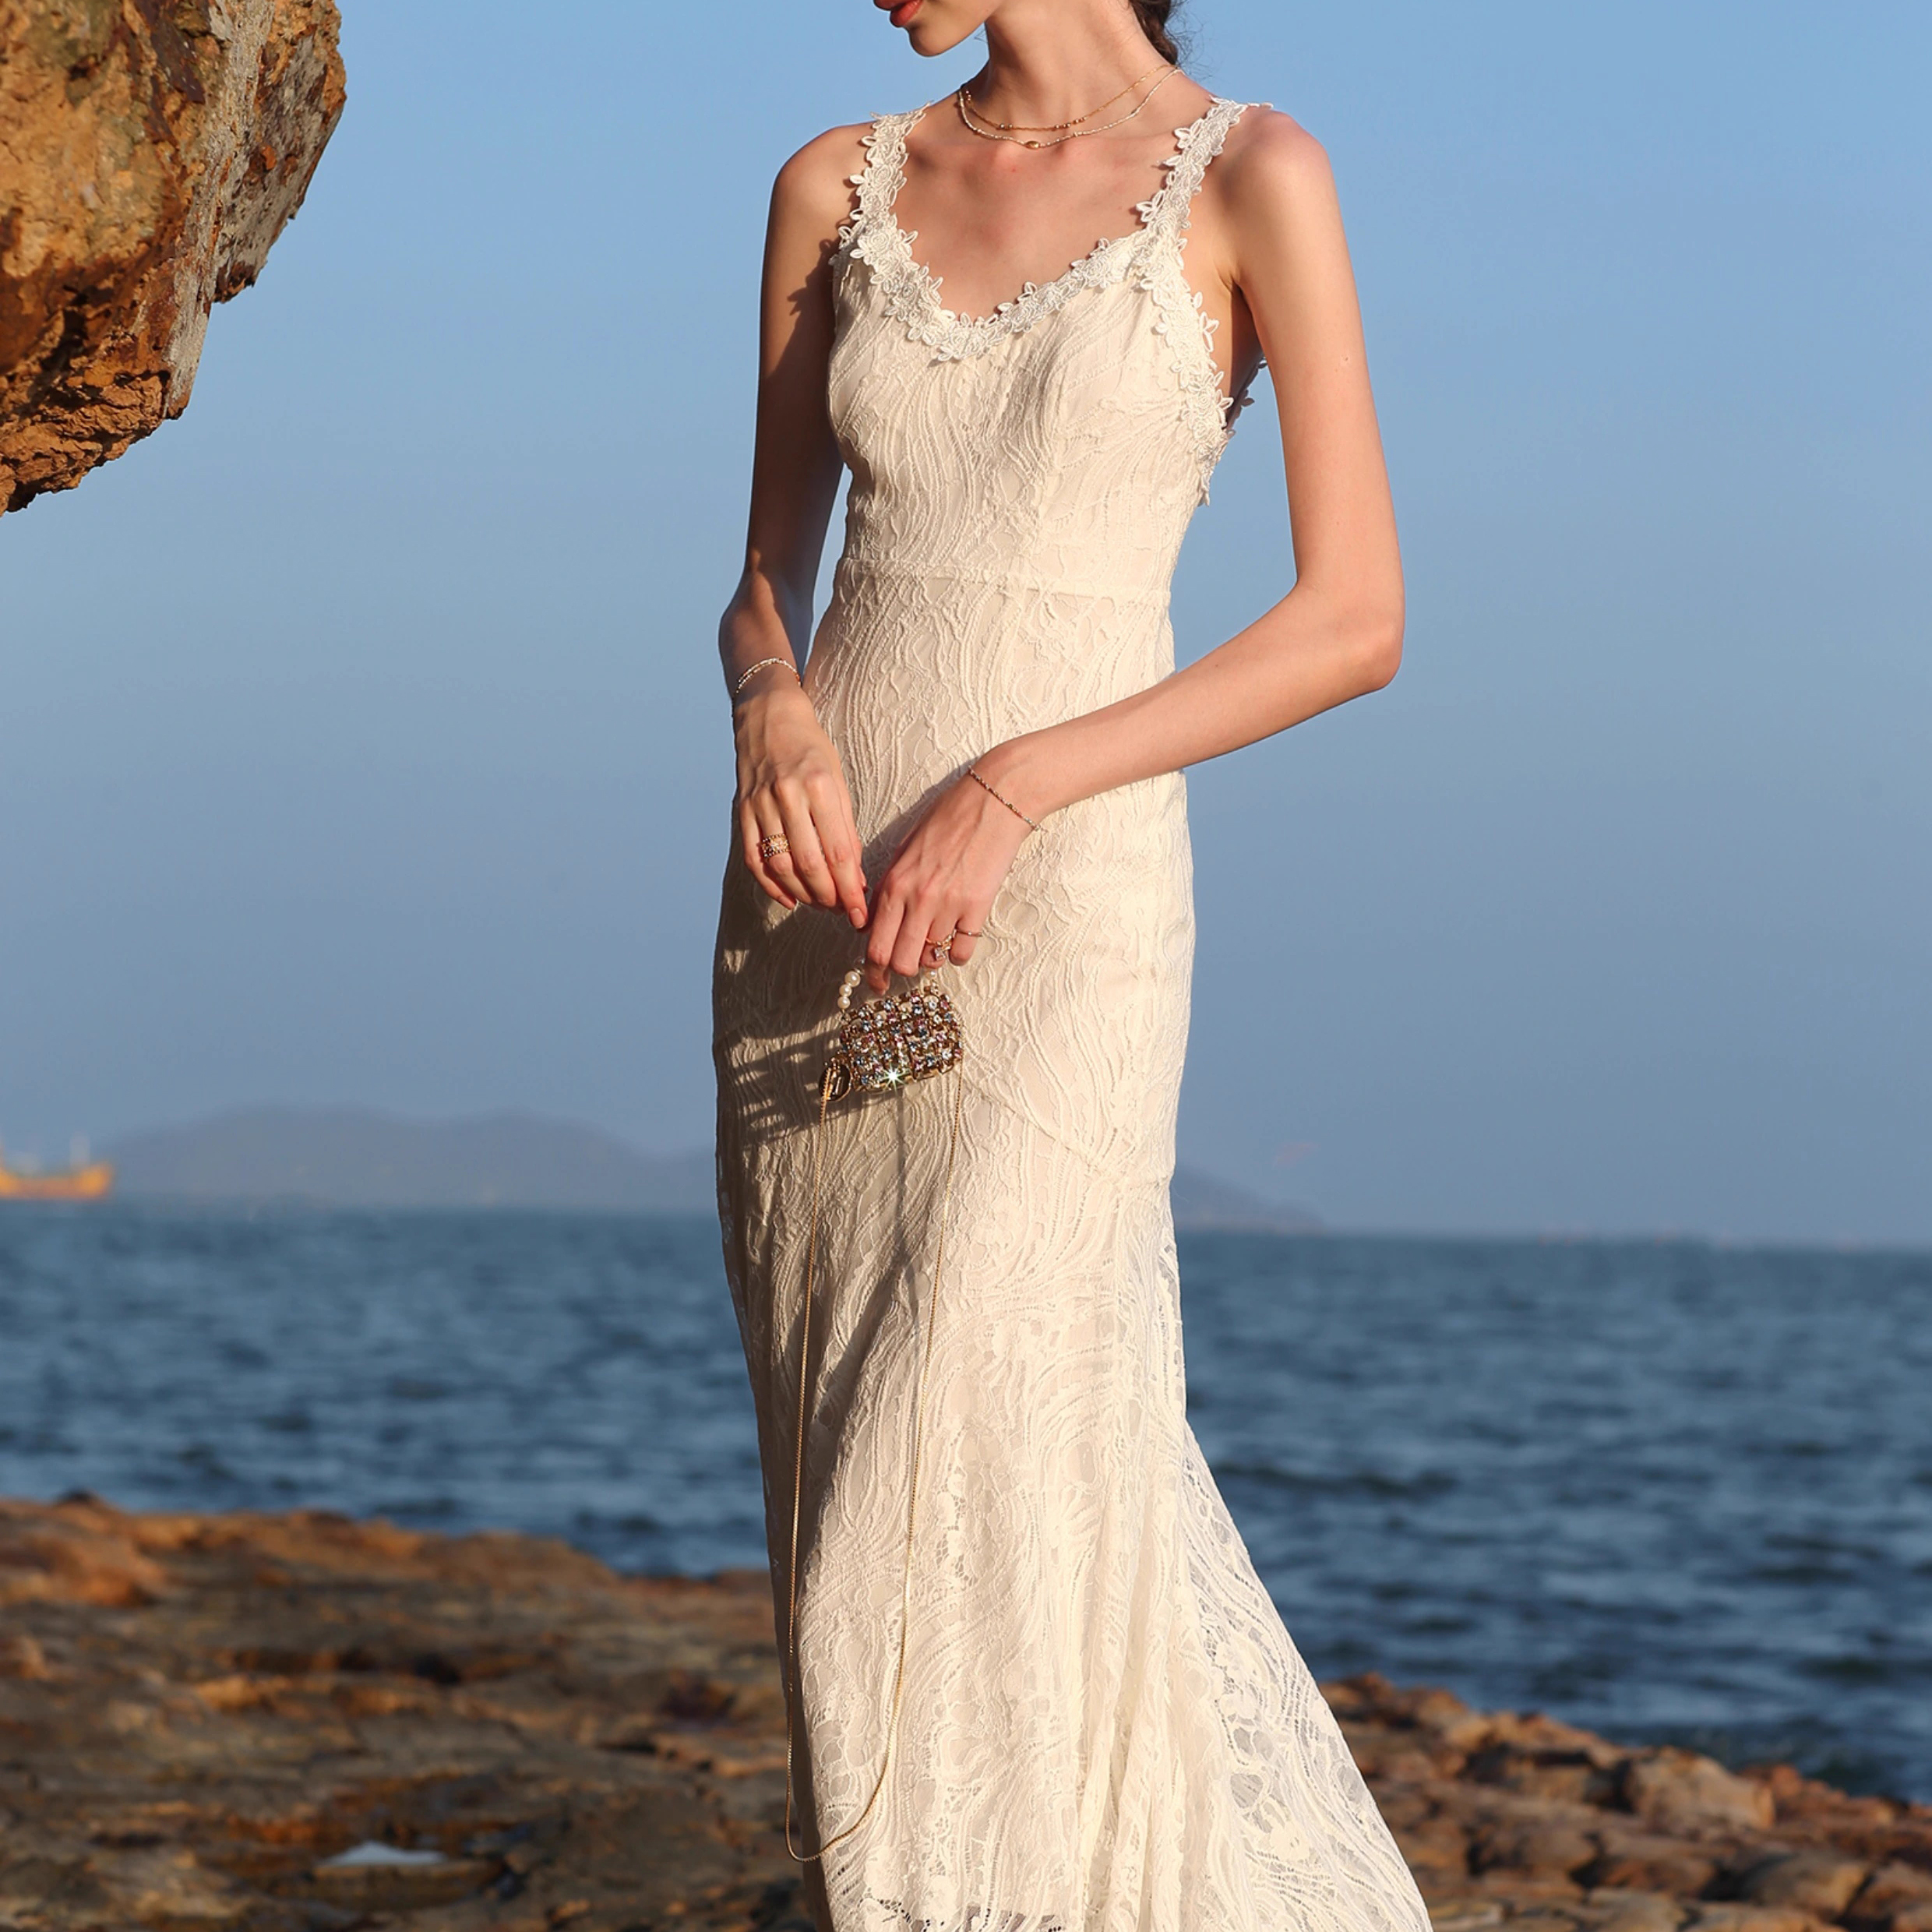 Customized Lace Wedding Backless White Fishtail Dresses (1)